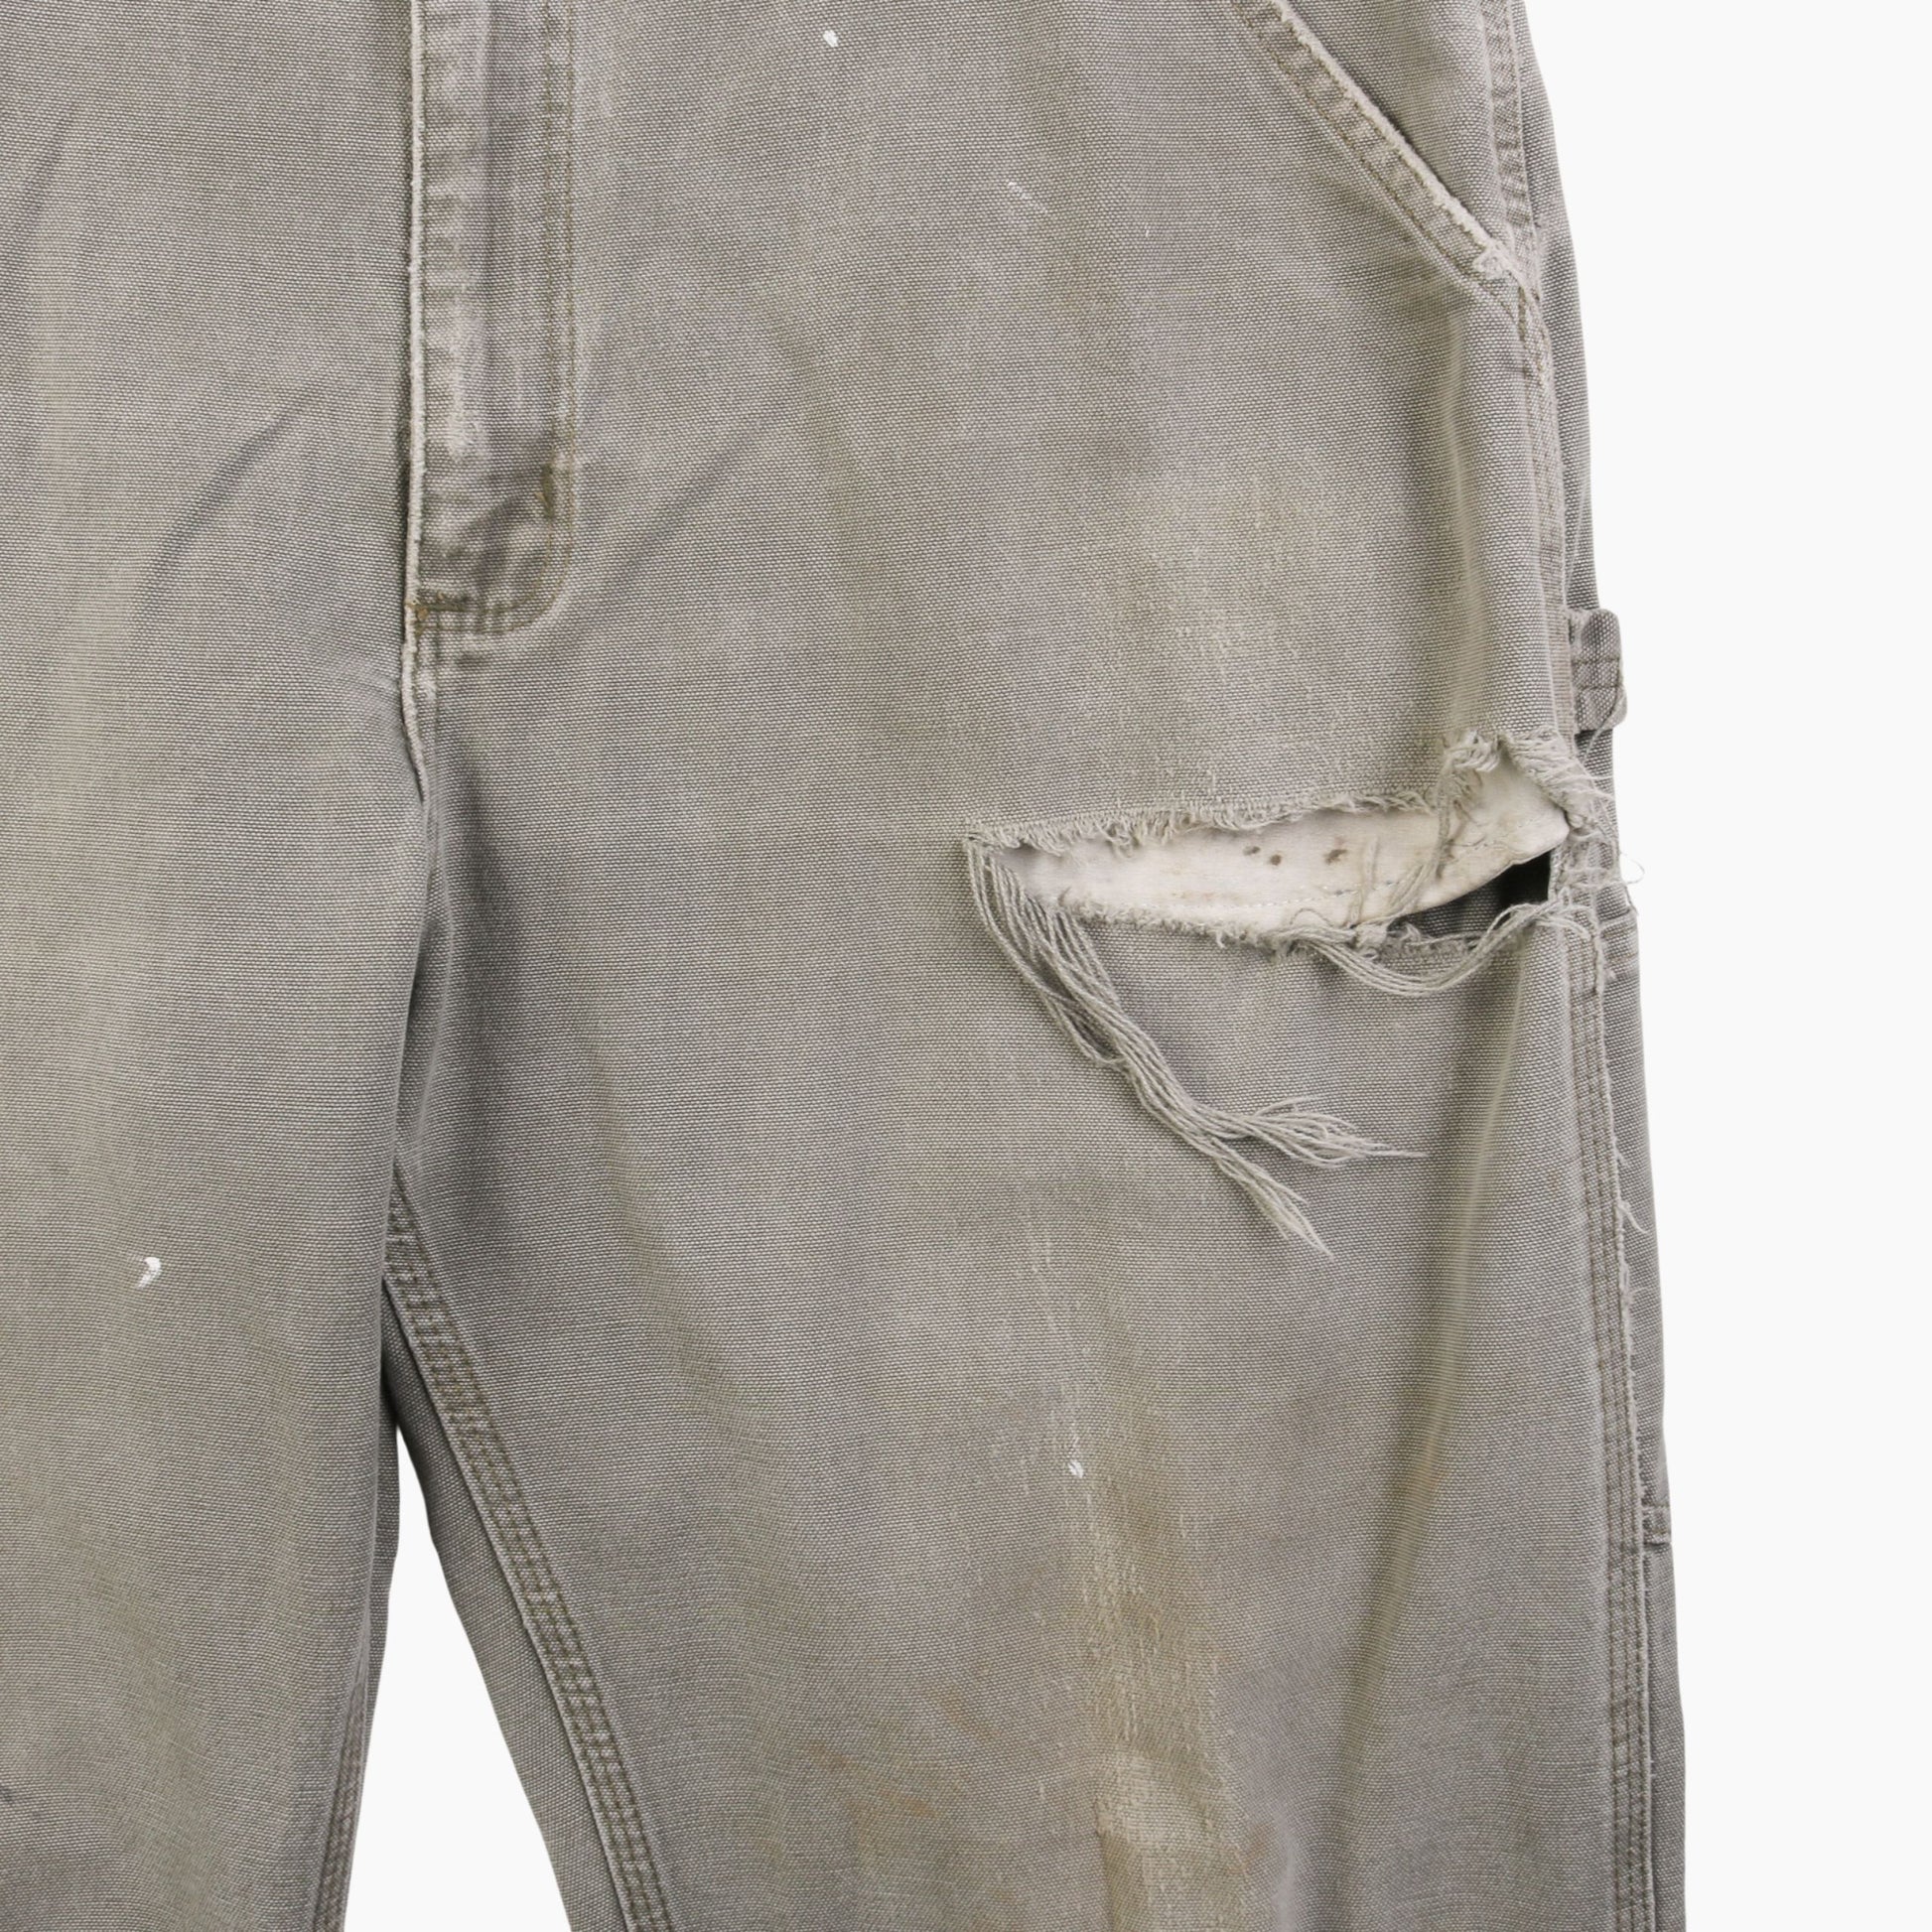 No Boundaries Canvas Carpenter Pants Size 36X31 Green 100% Cotton Workwear